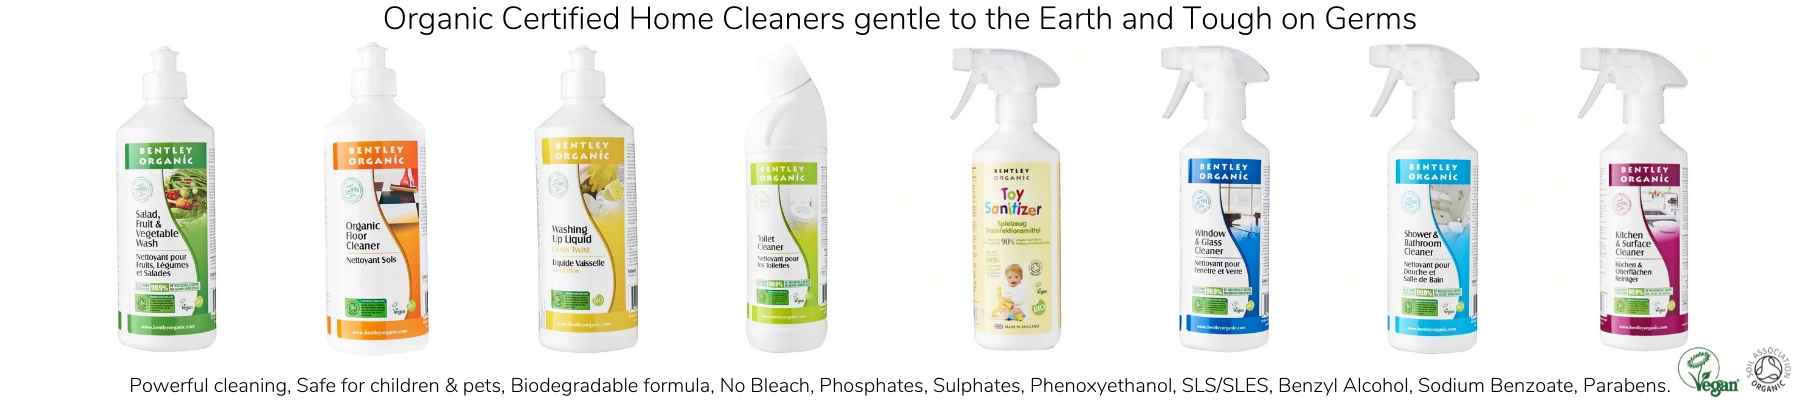 Bentley Organic Homecare & Sanitizers